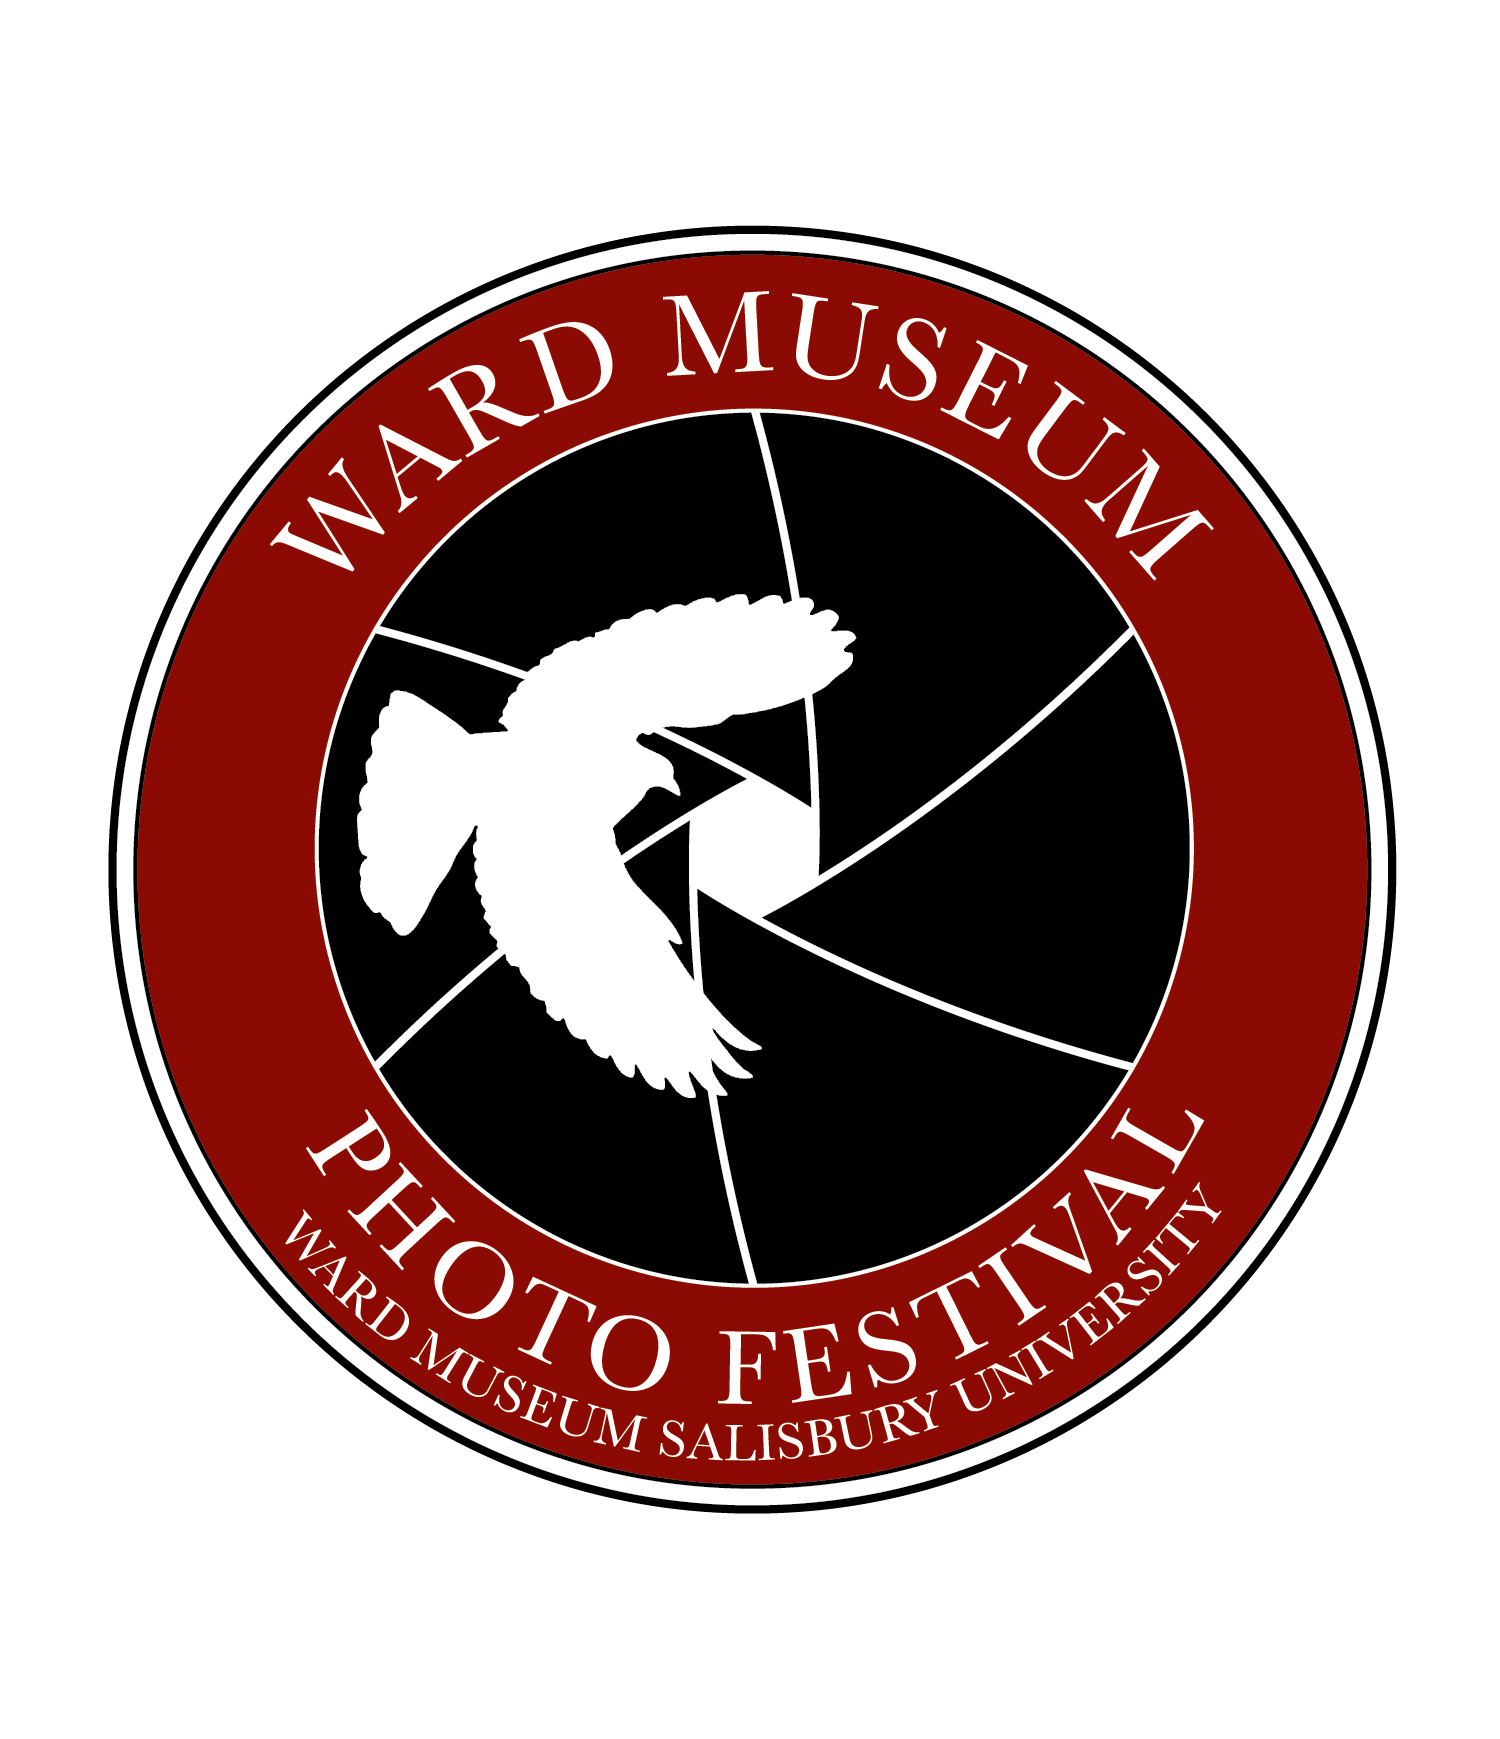 Ward Museum Photo Festival